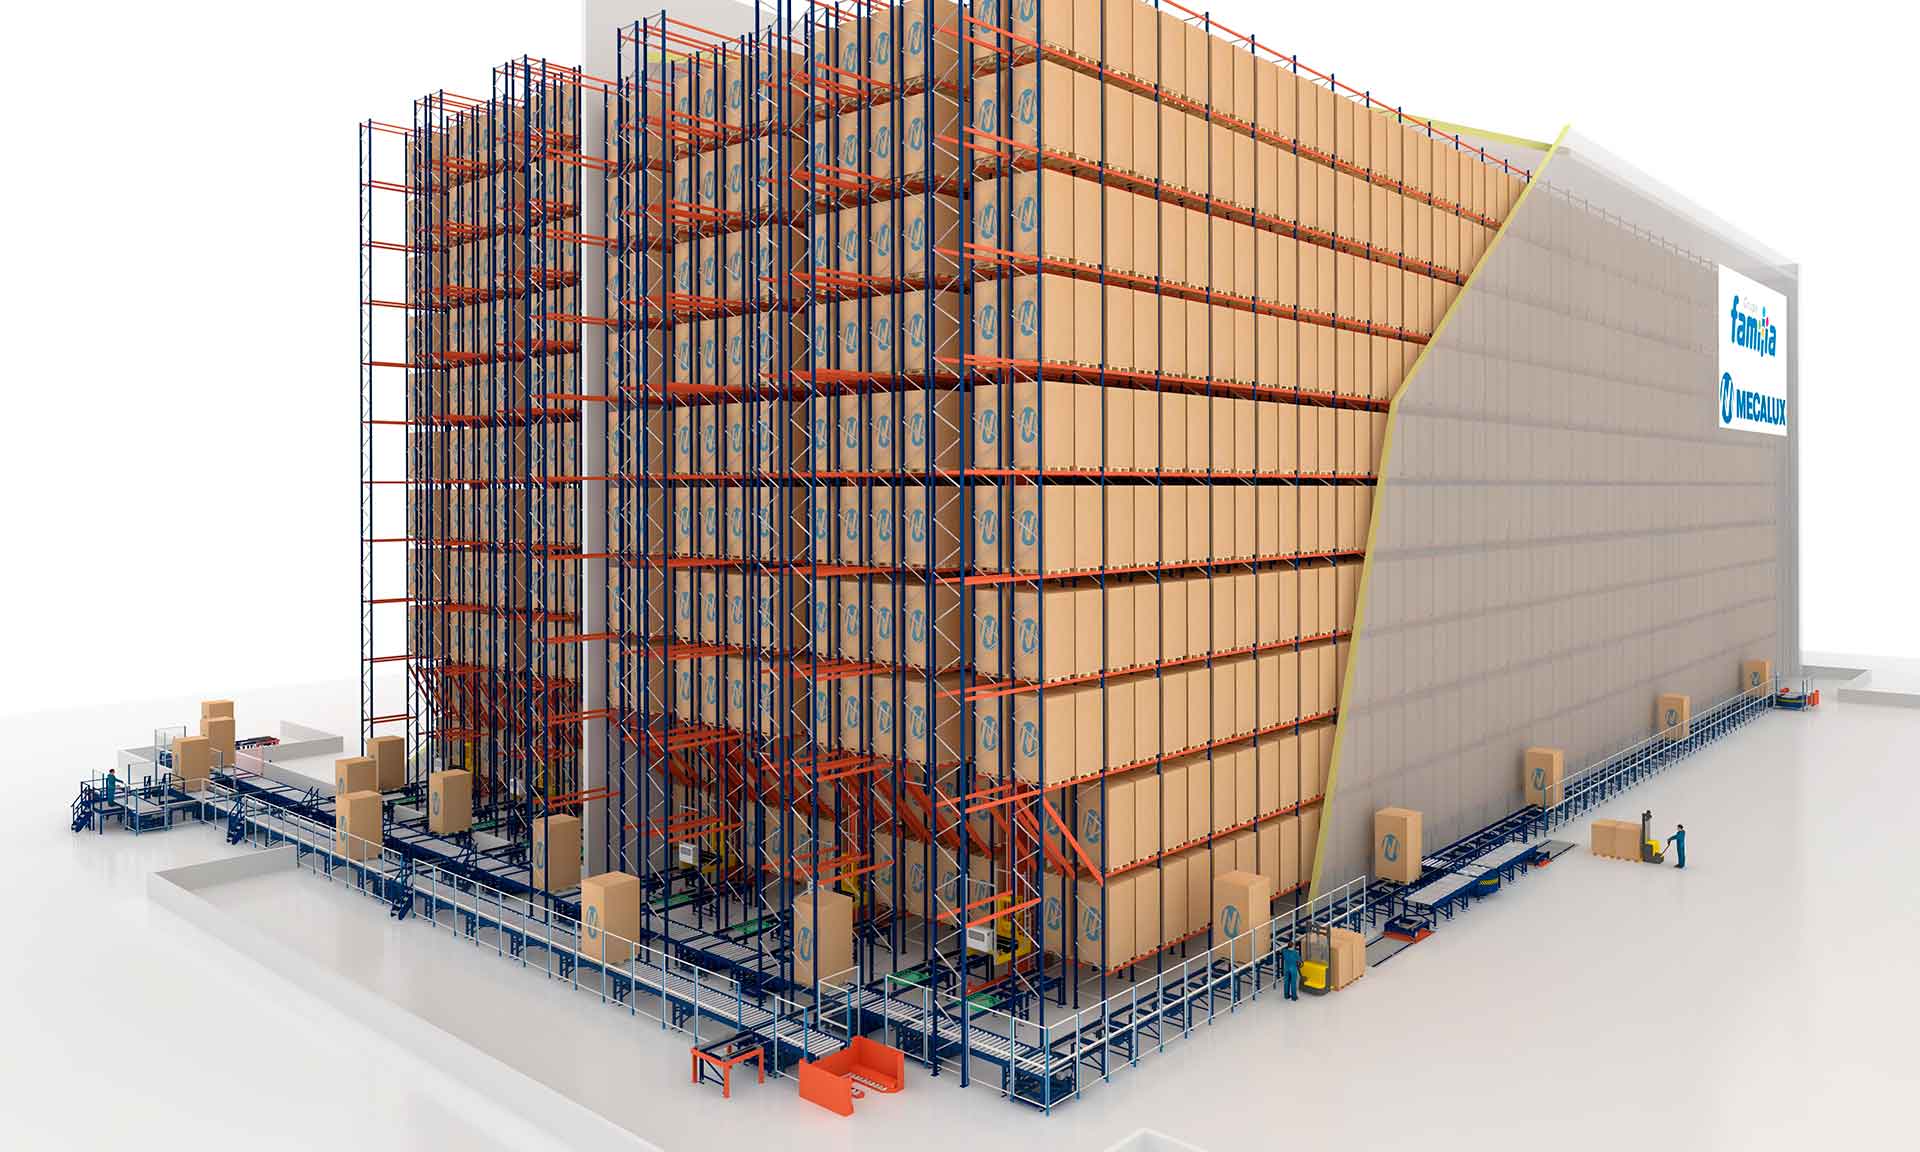 The Grupo Familia warehouse has a capacity to accommodate 19,000 pallets